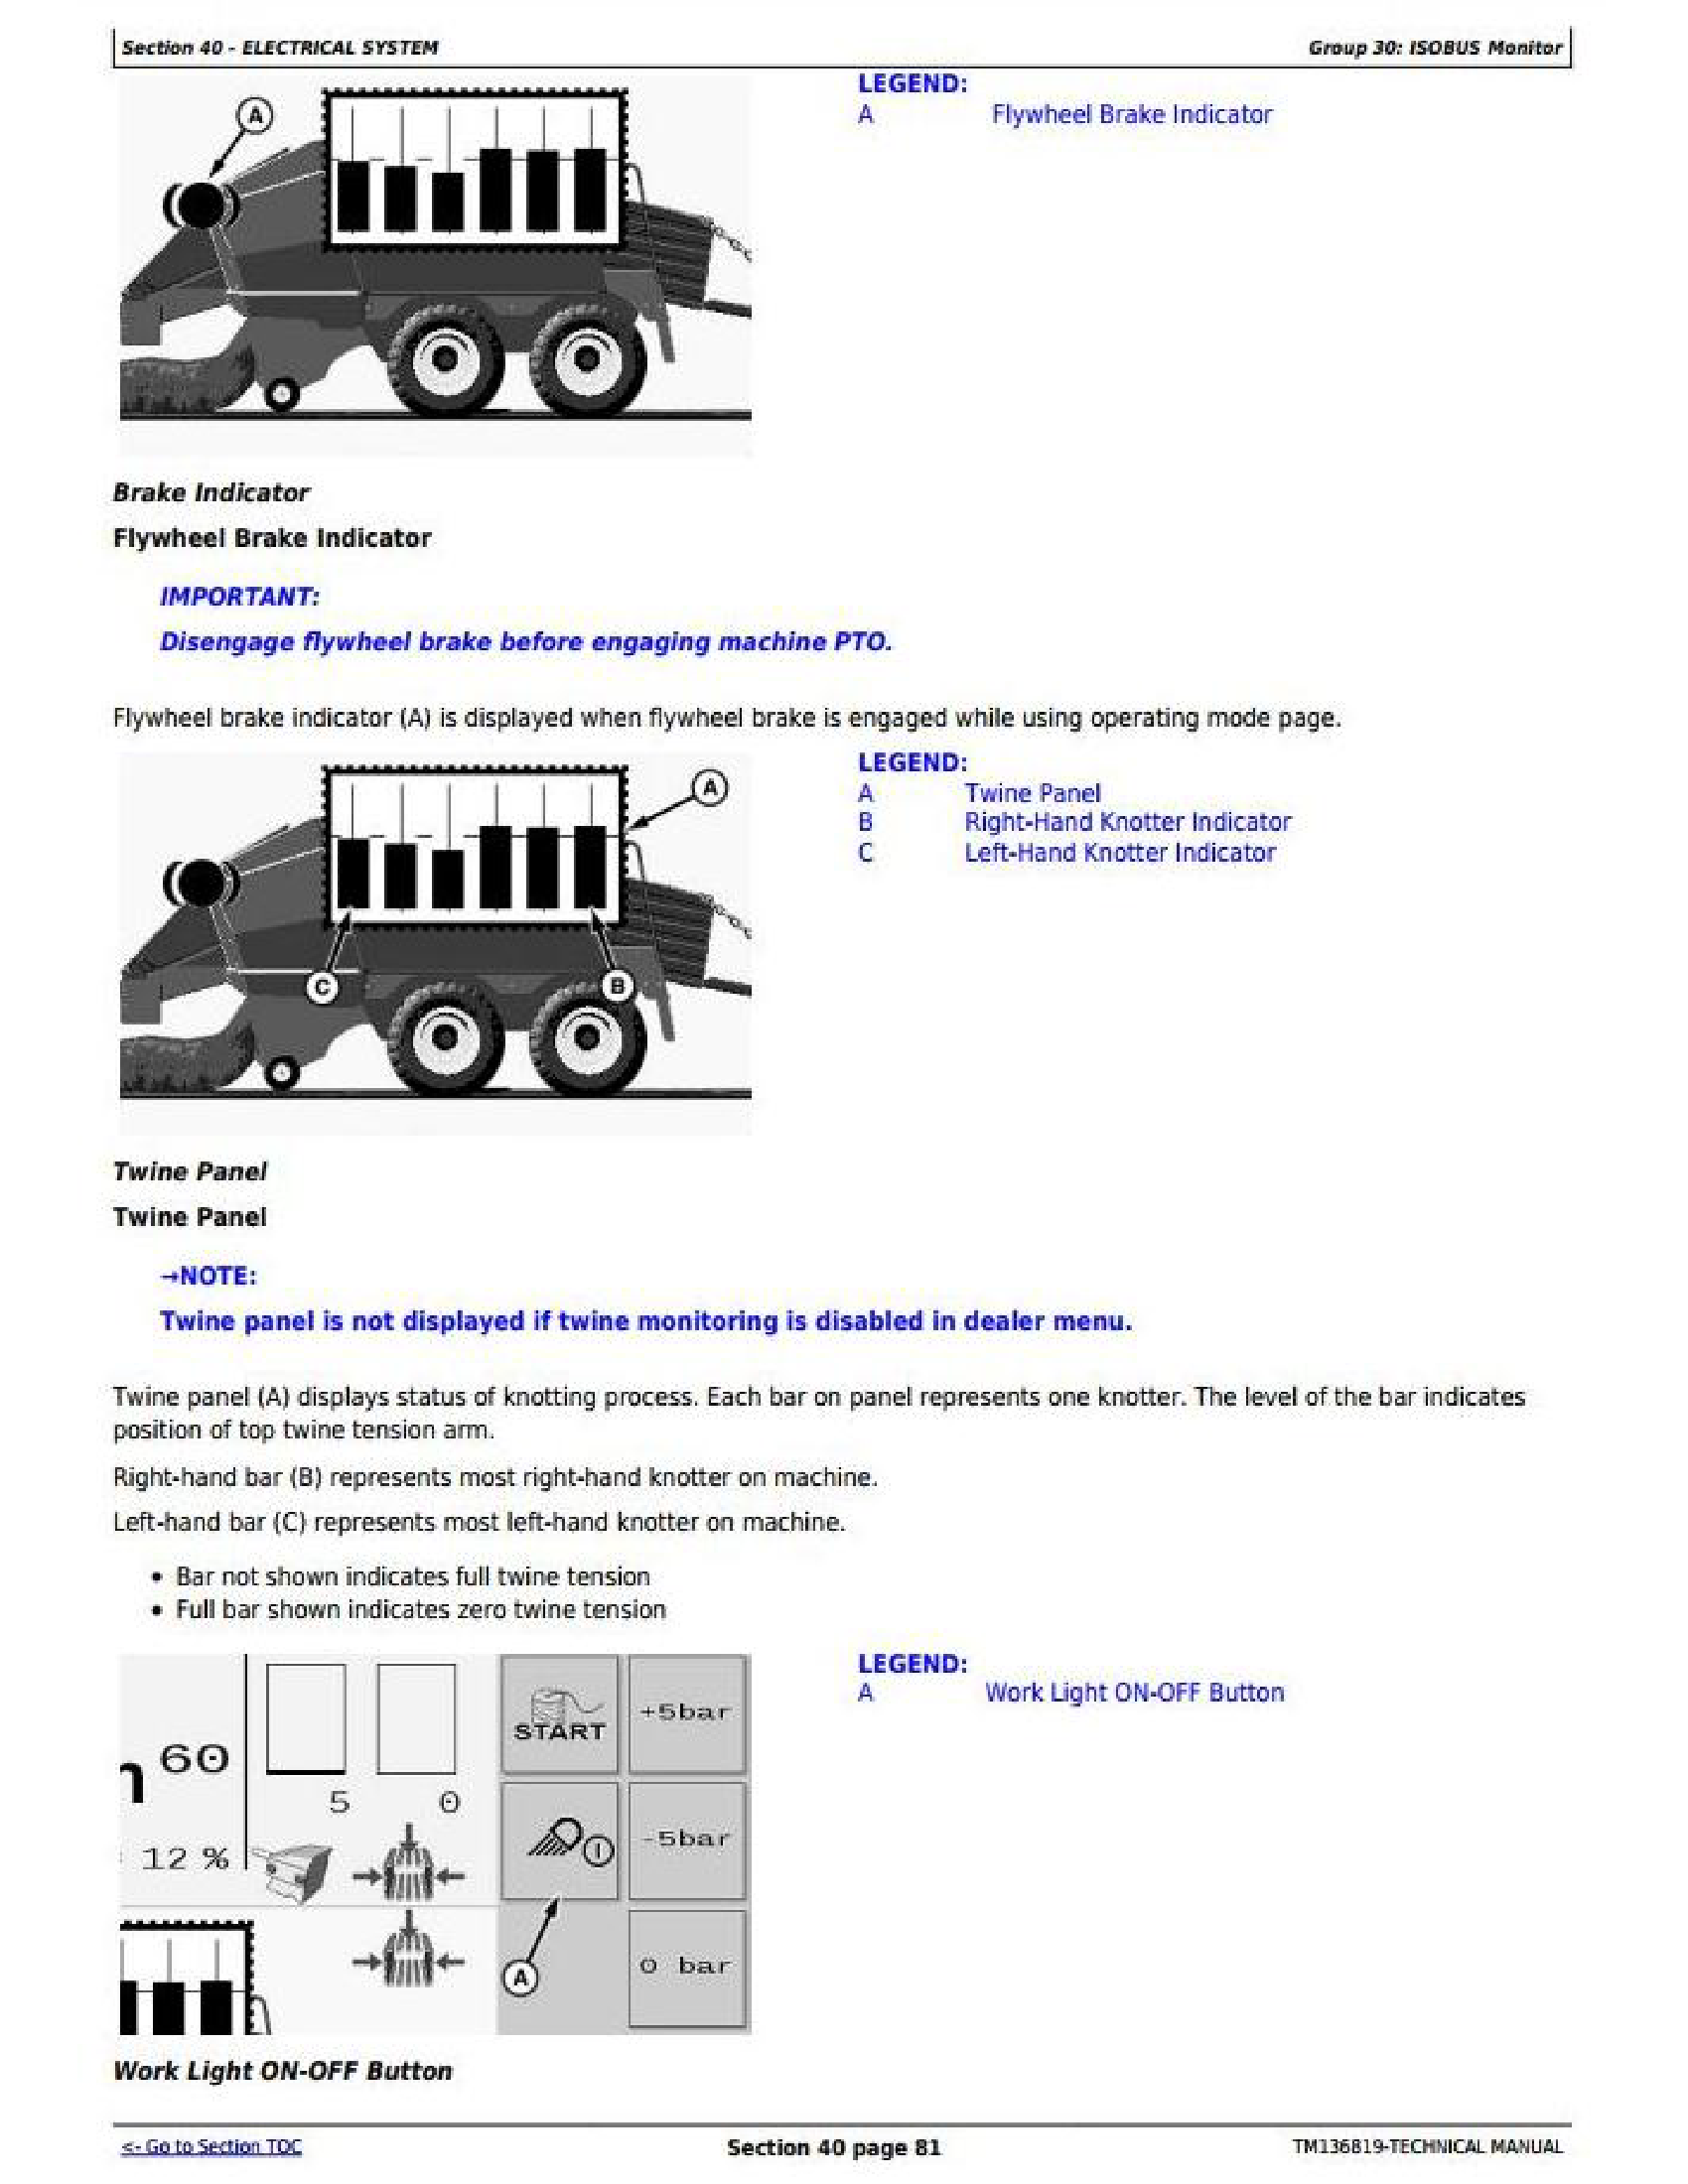 John Deere L1534 manual pdf